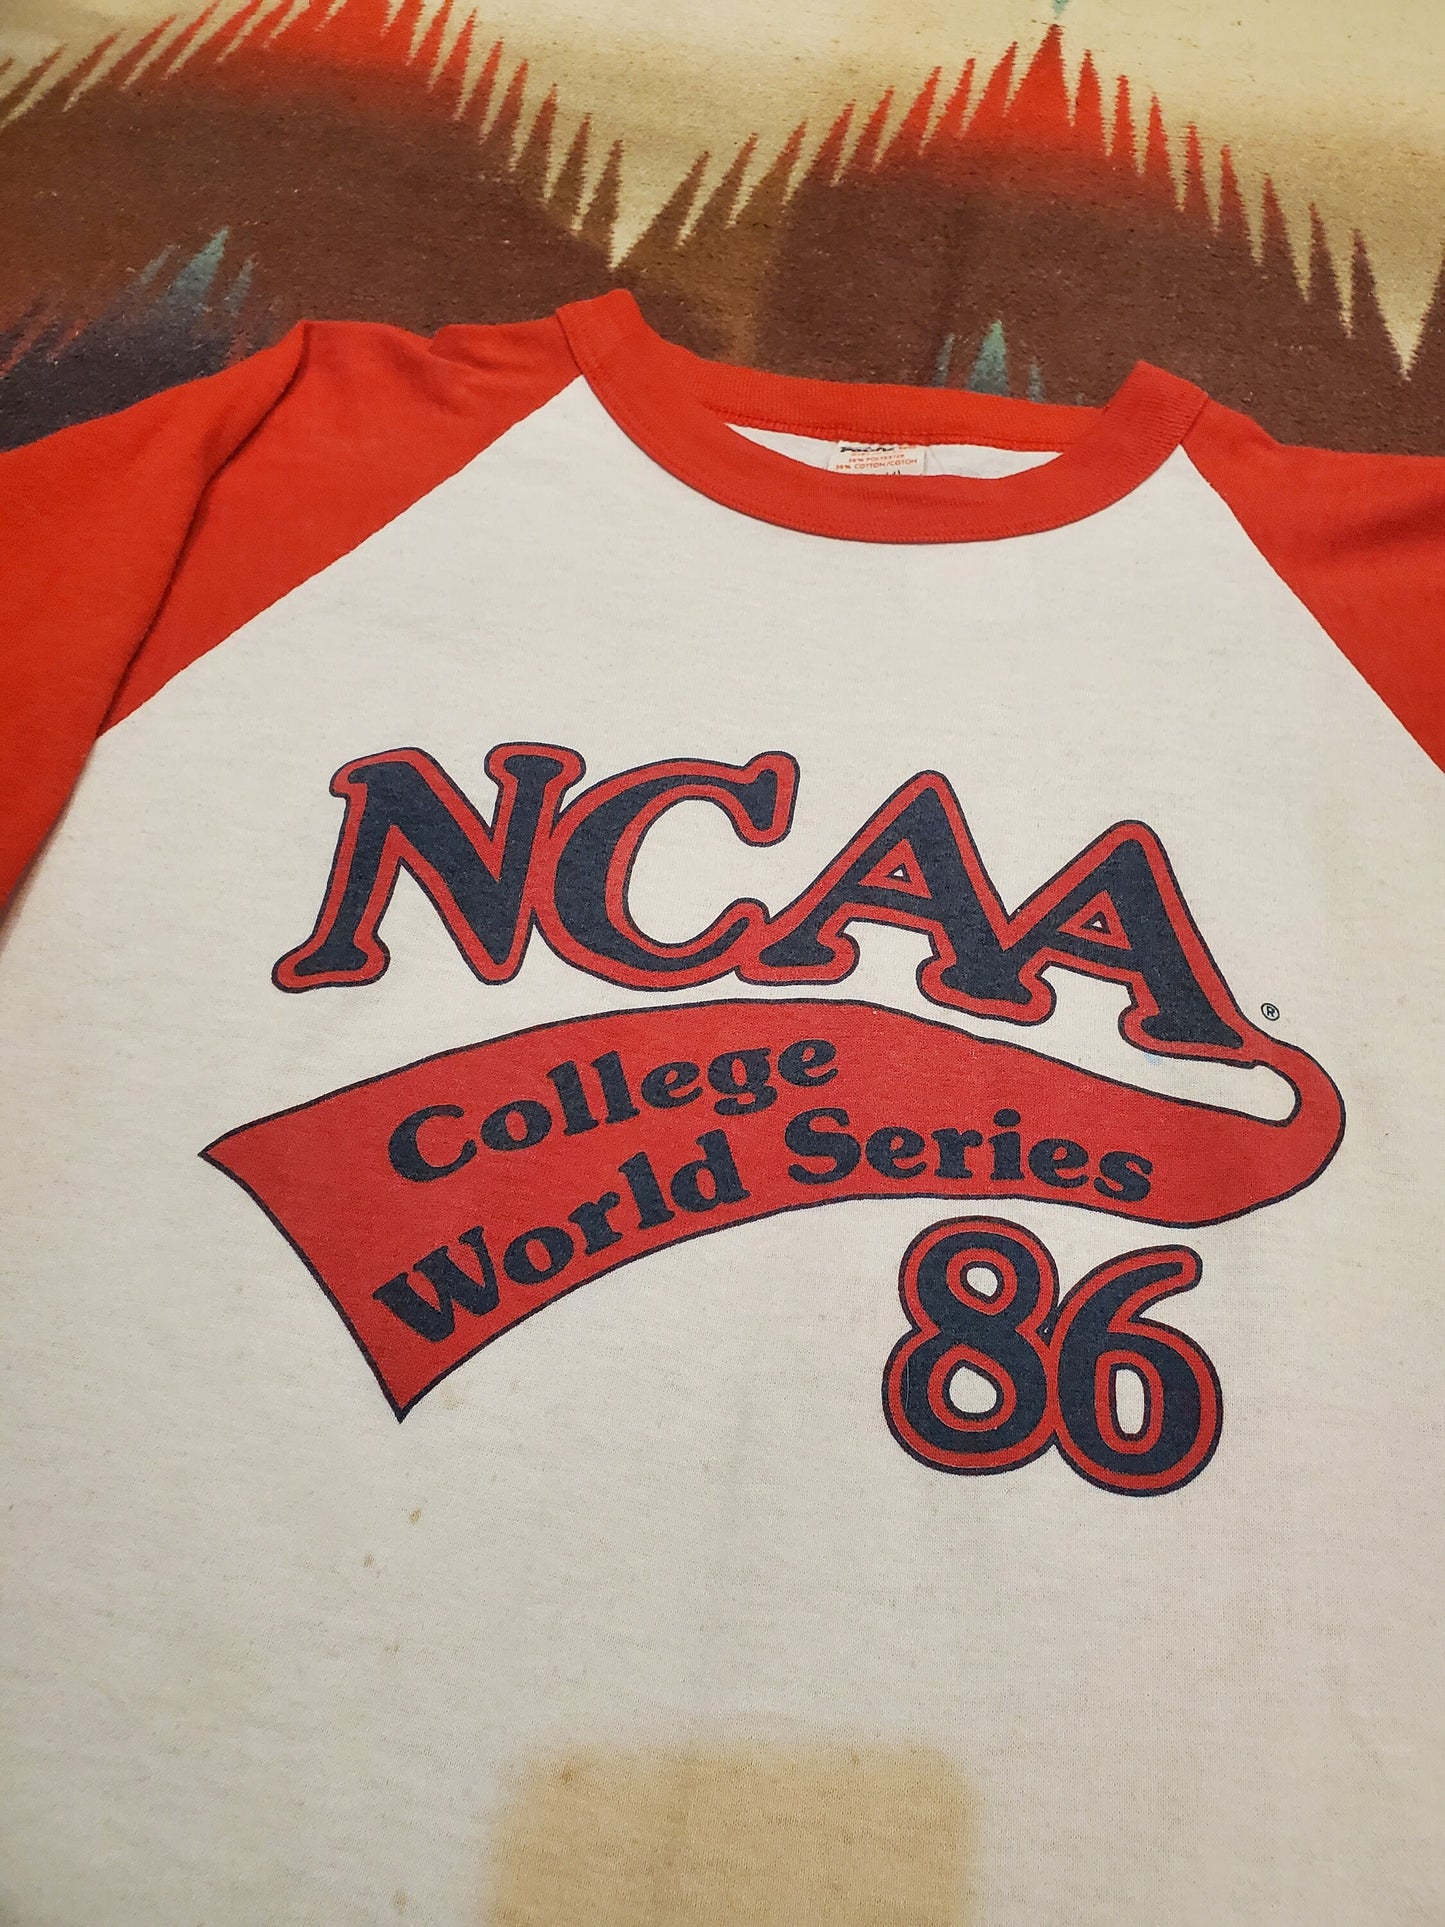 1980s 1986 College World Series Omaha Baseball Raglan T-Shirt Made in USA Size S